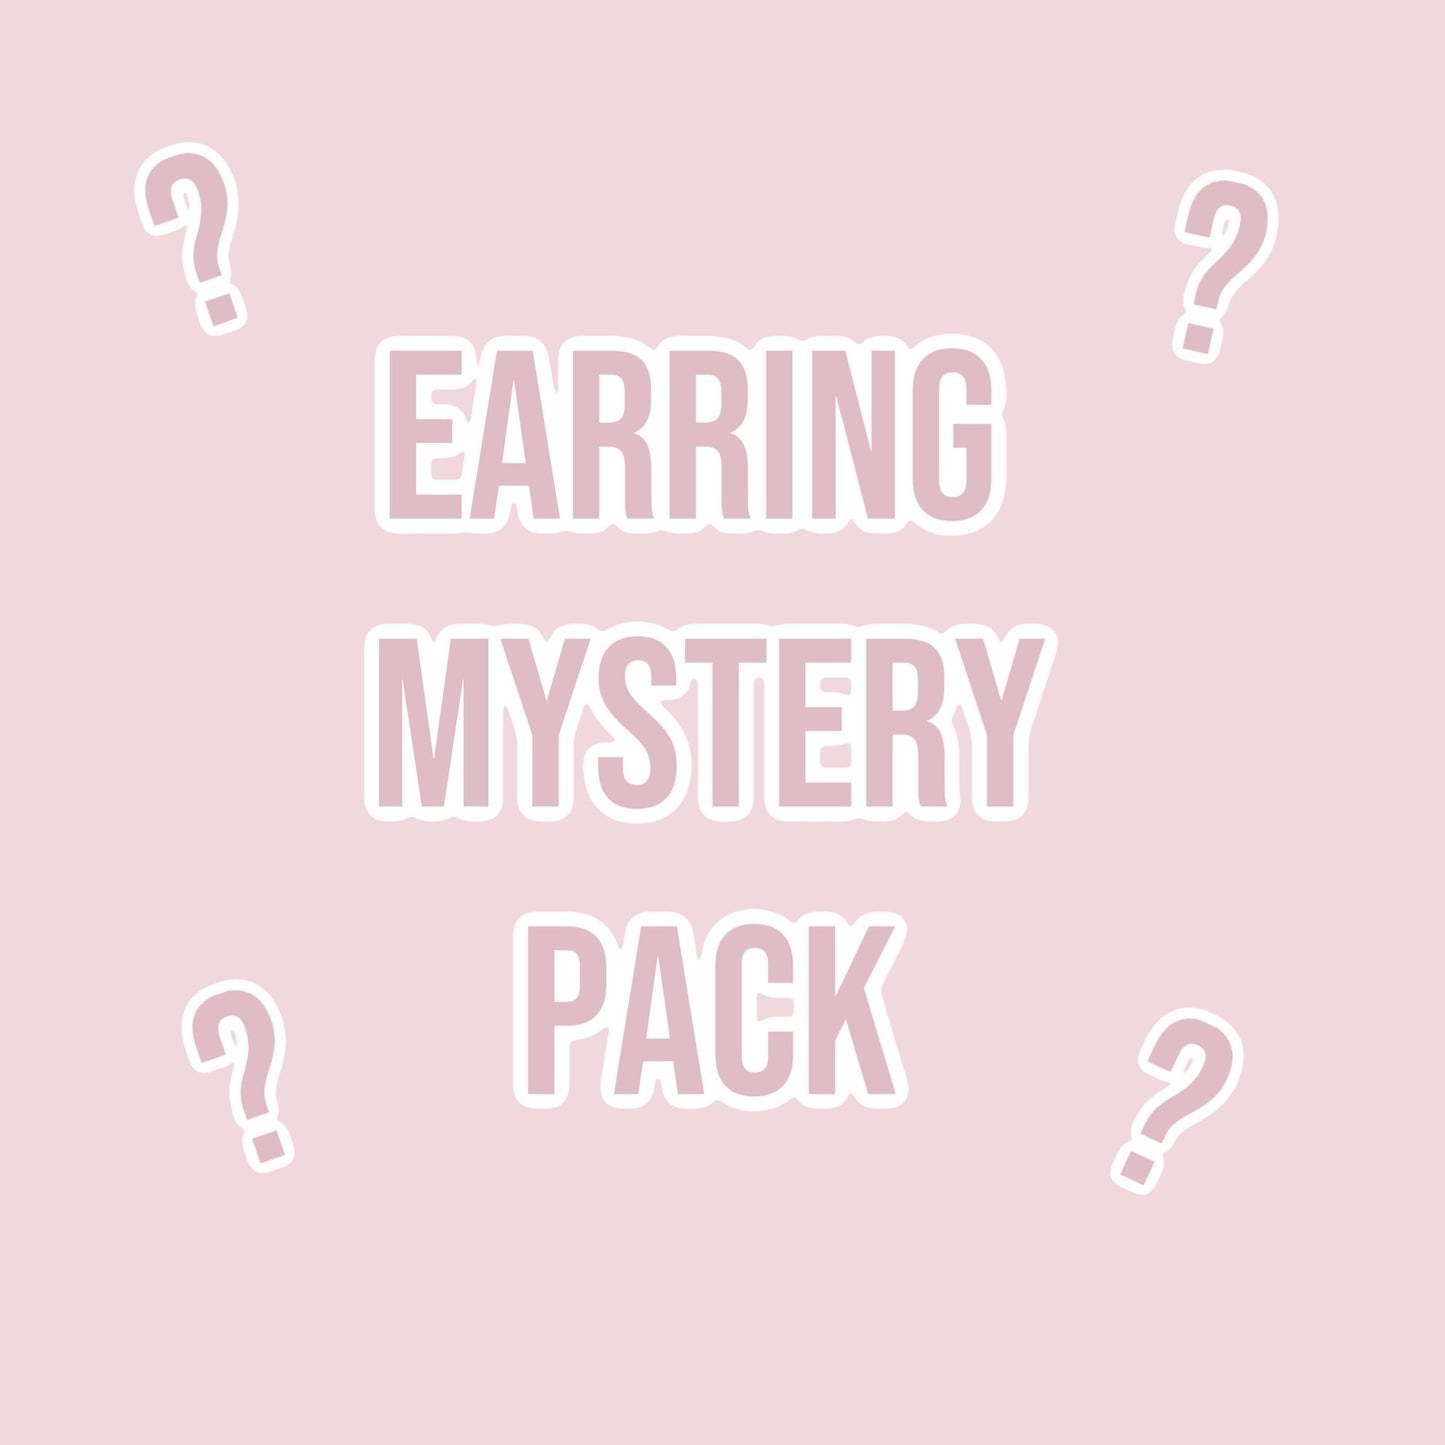 Earring Mystery Pack!